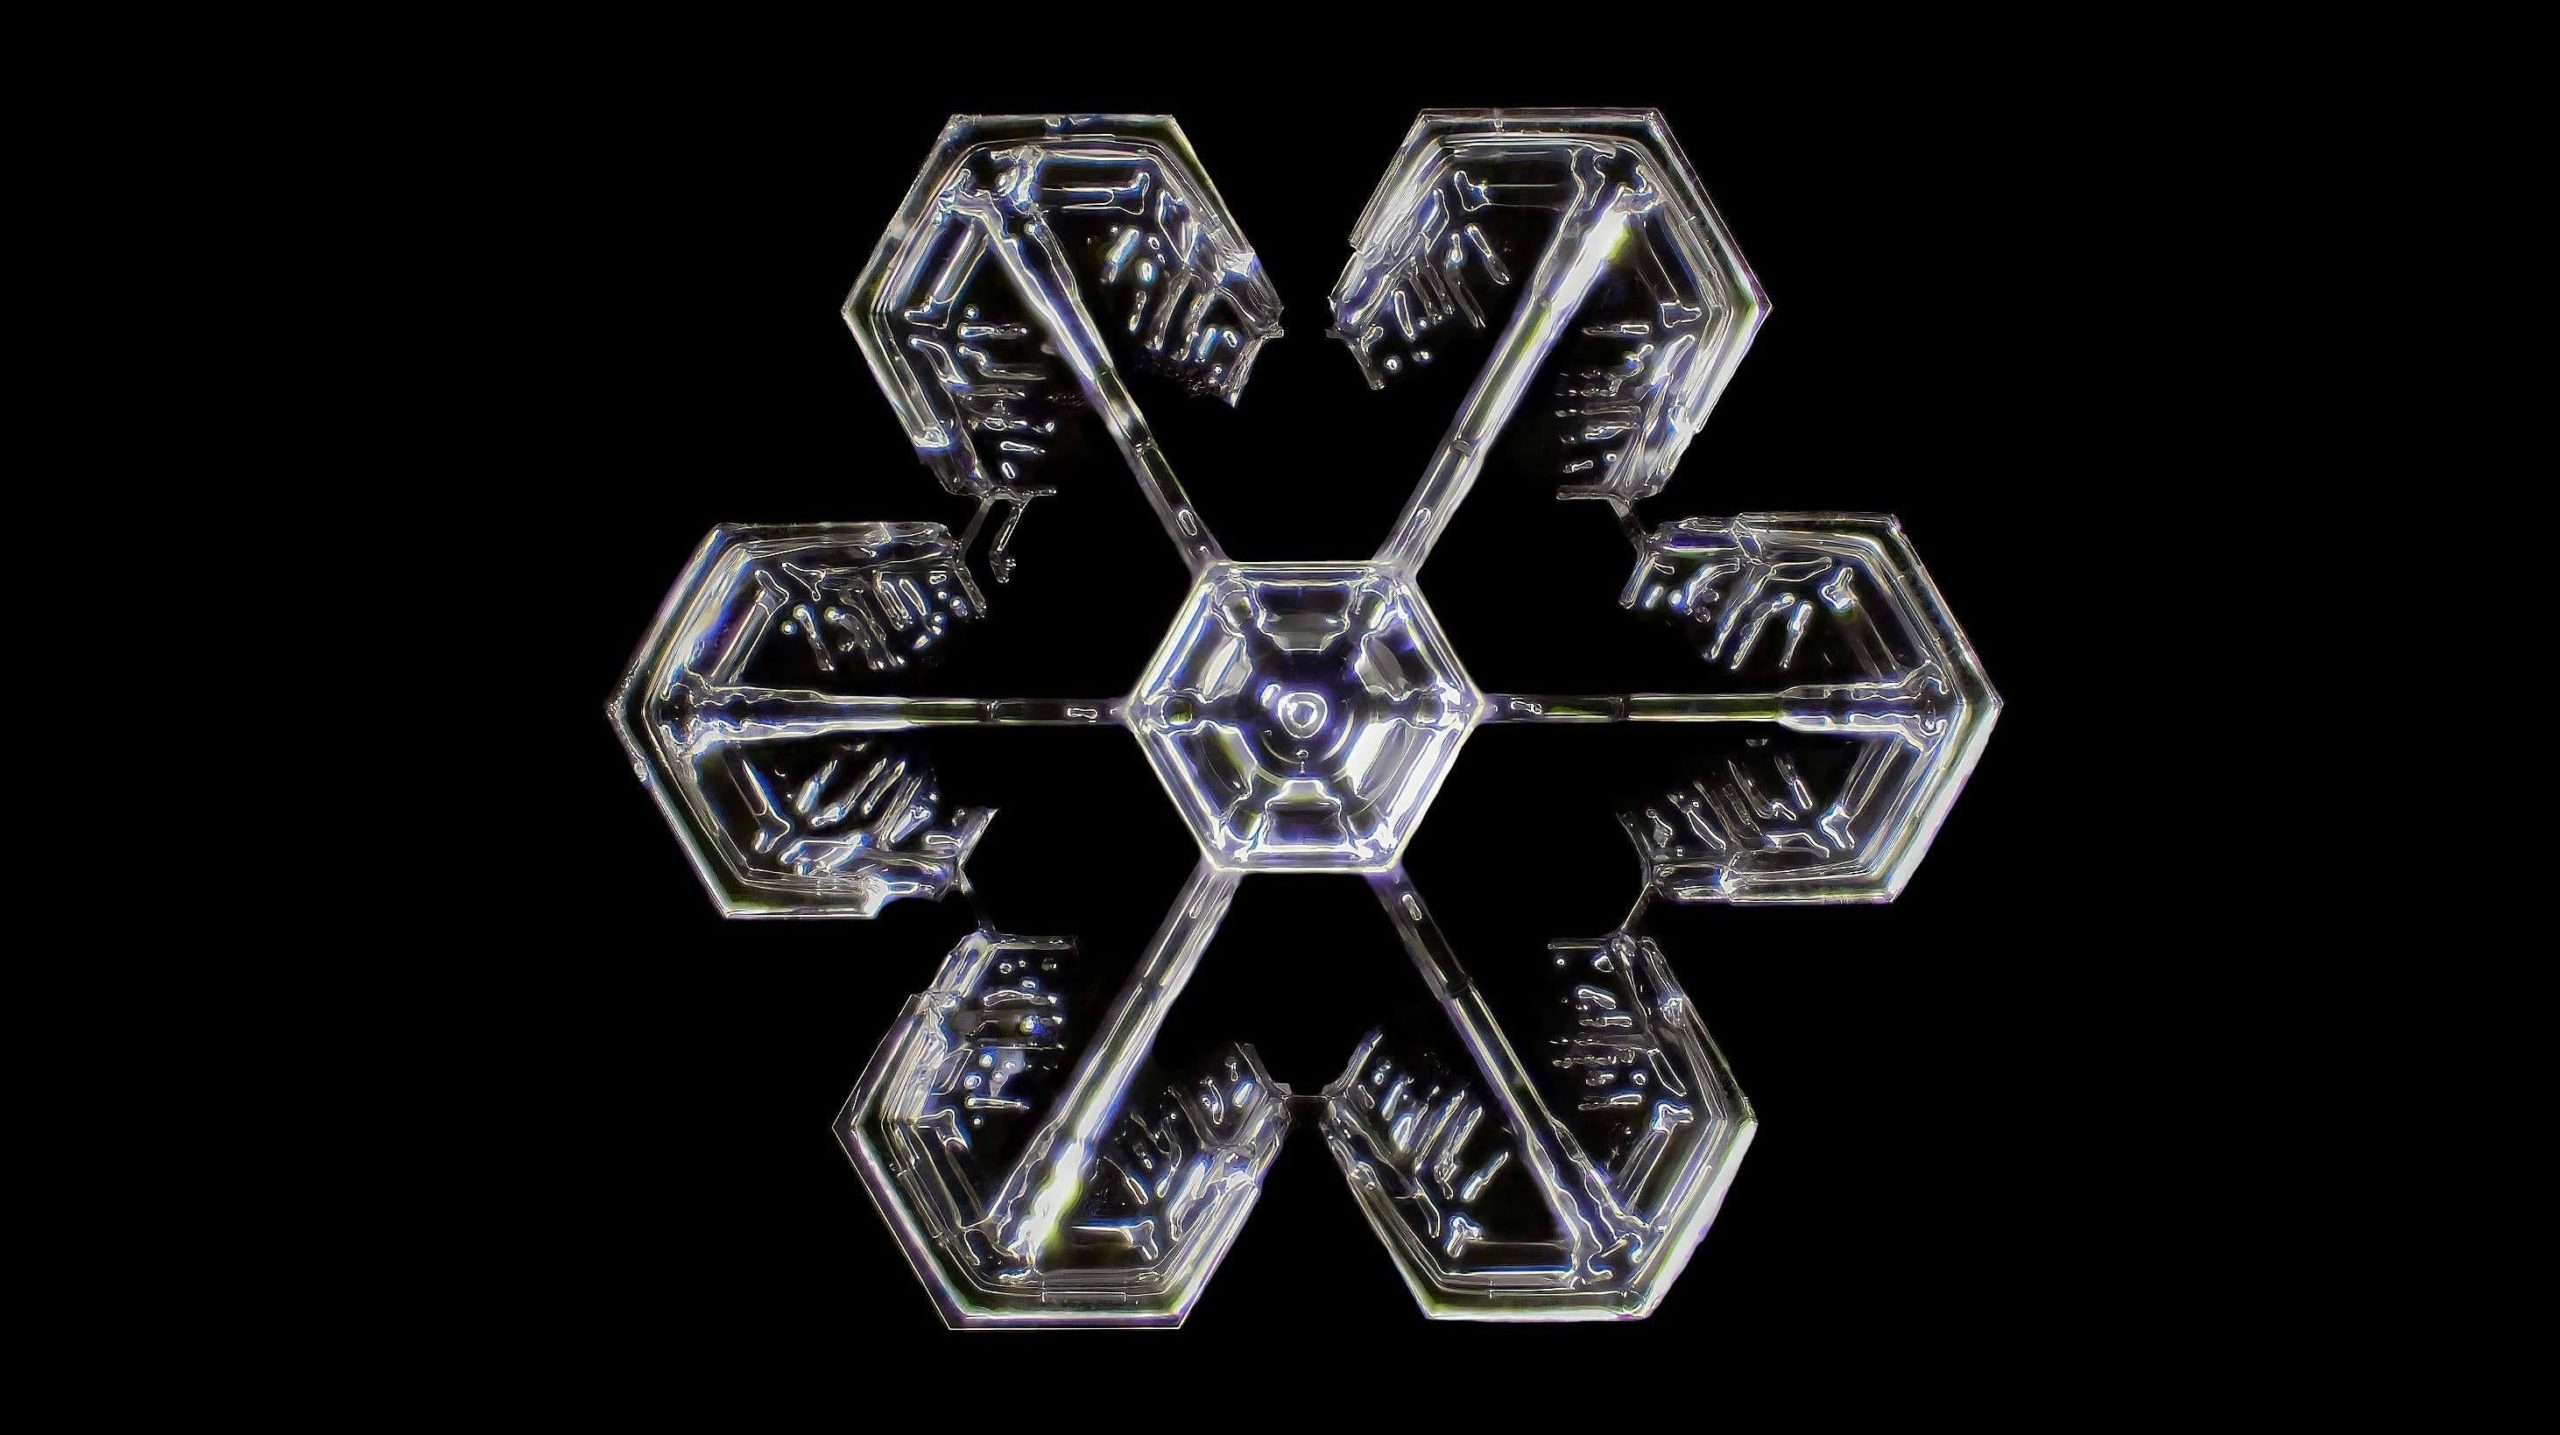 A snowflake at 4-times magnification. (Image: Joern N. Hopke)